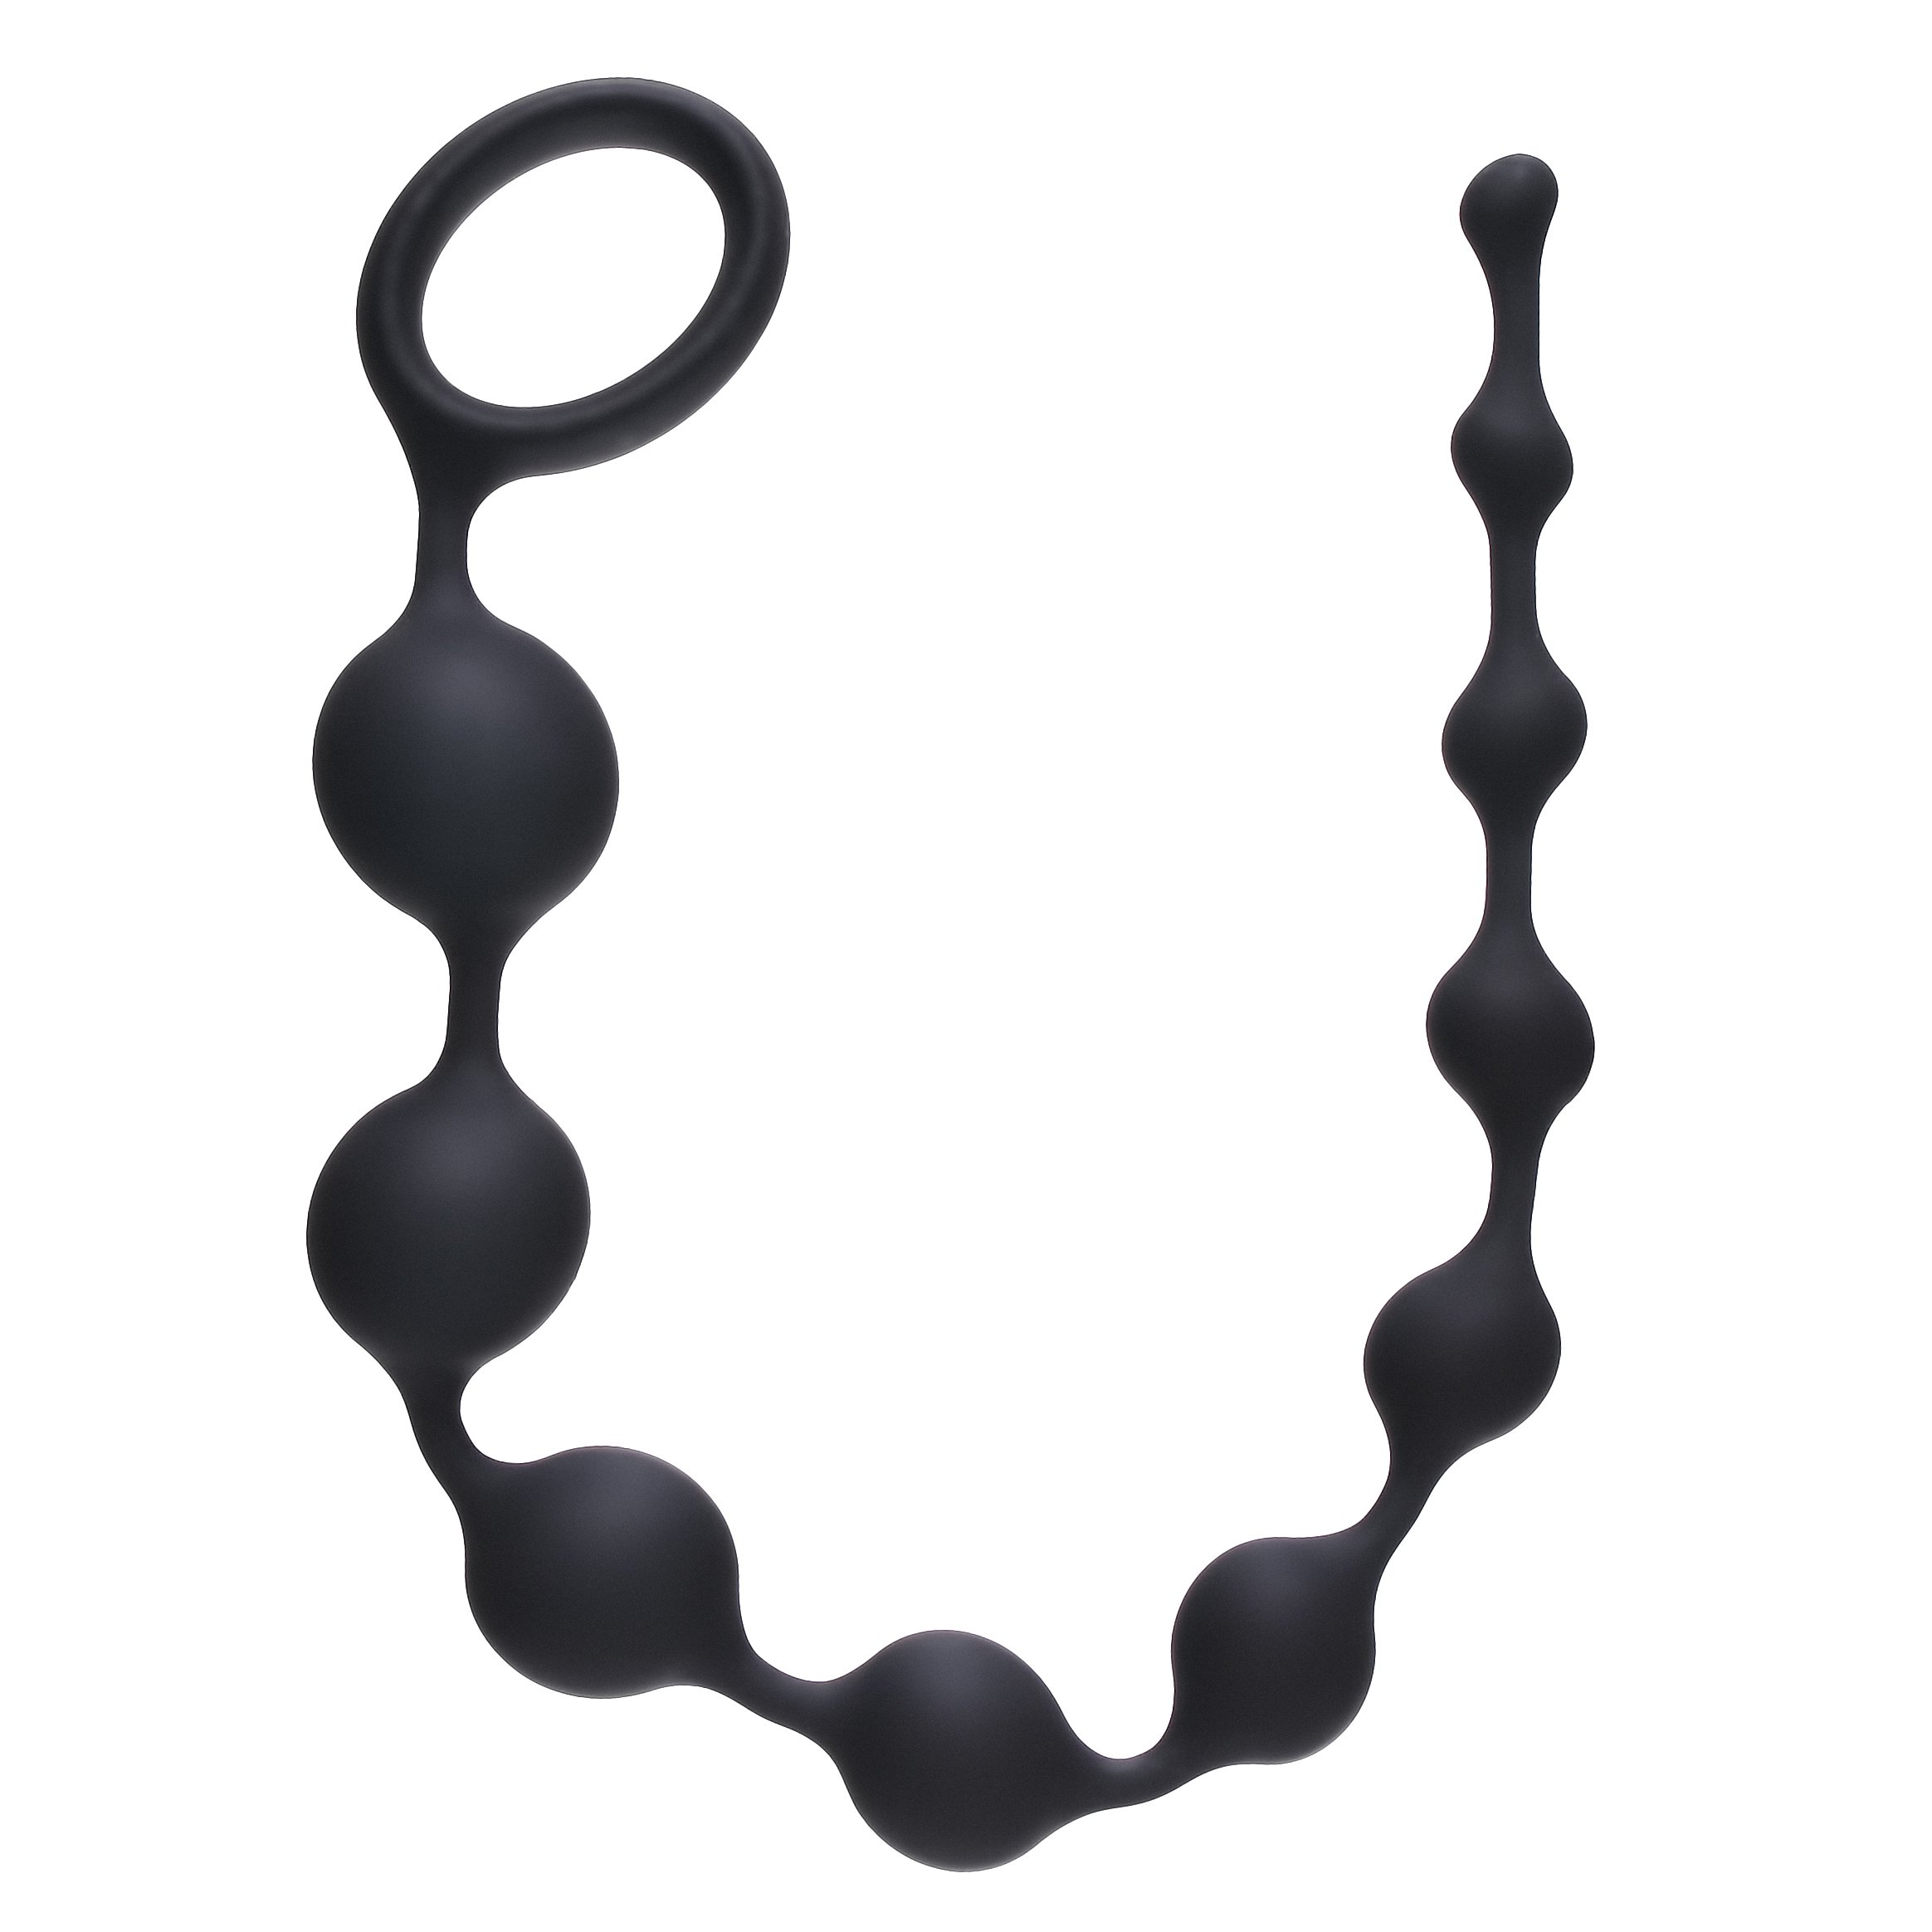 Анальная цепочка Pleasure Chain со звеньями разного диаметра, черная